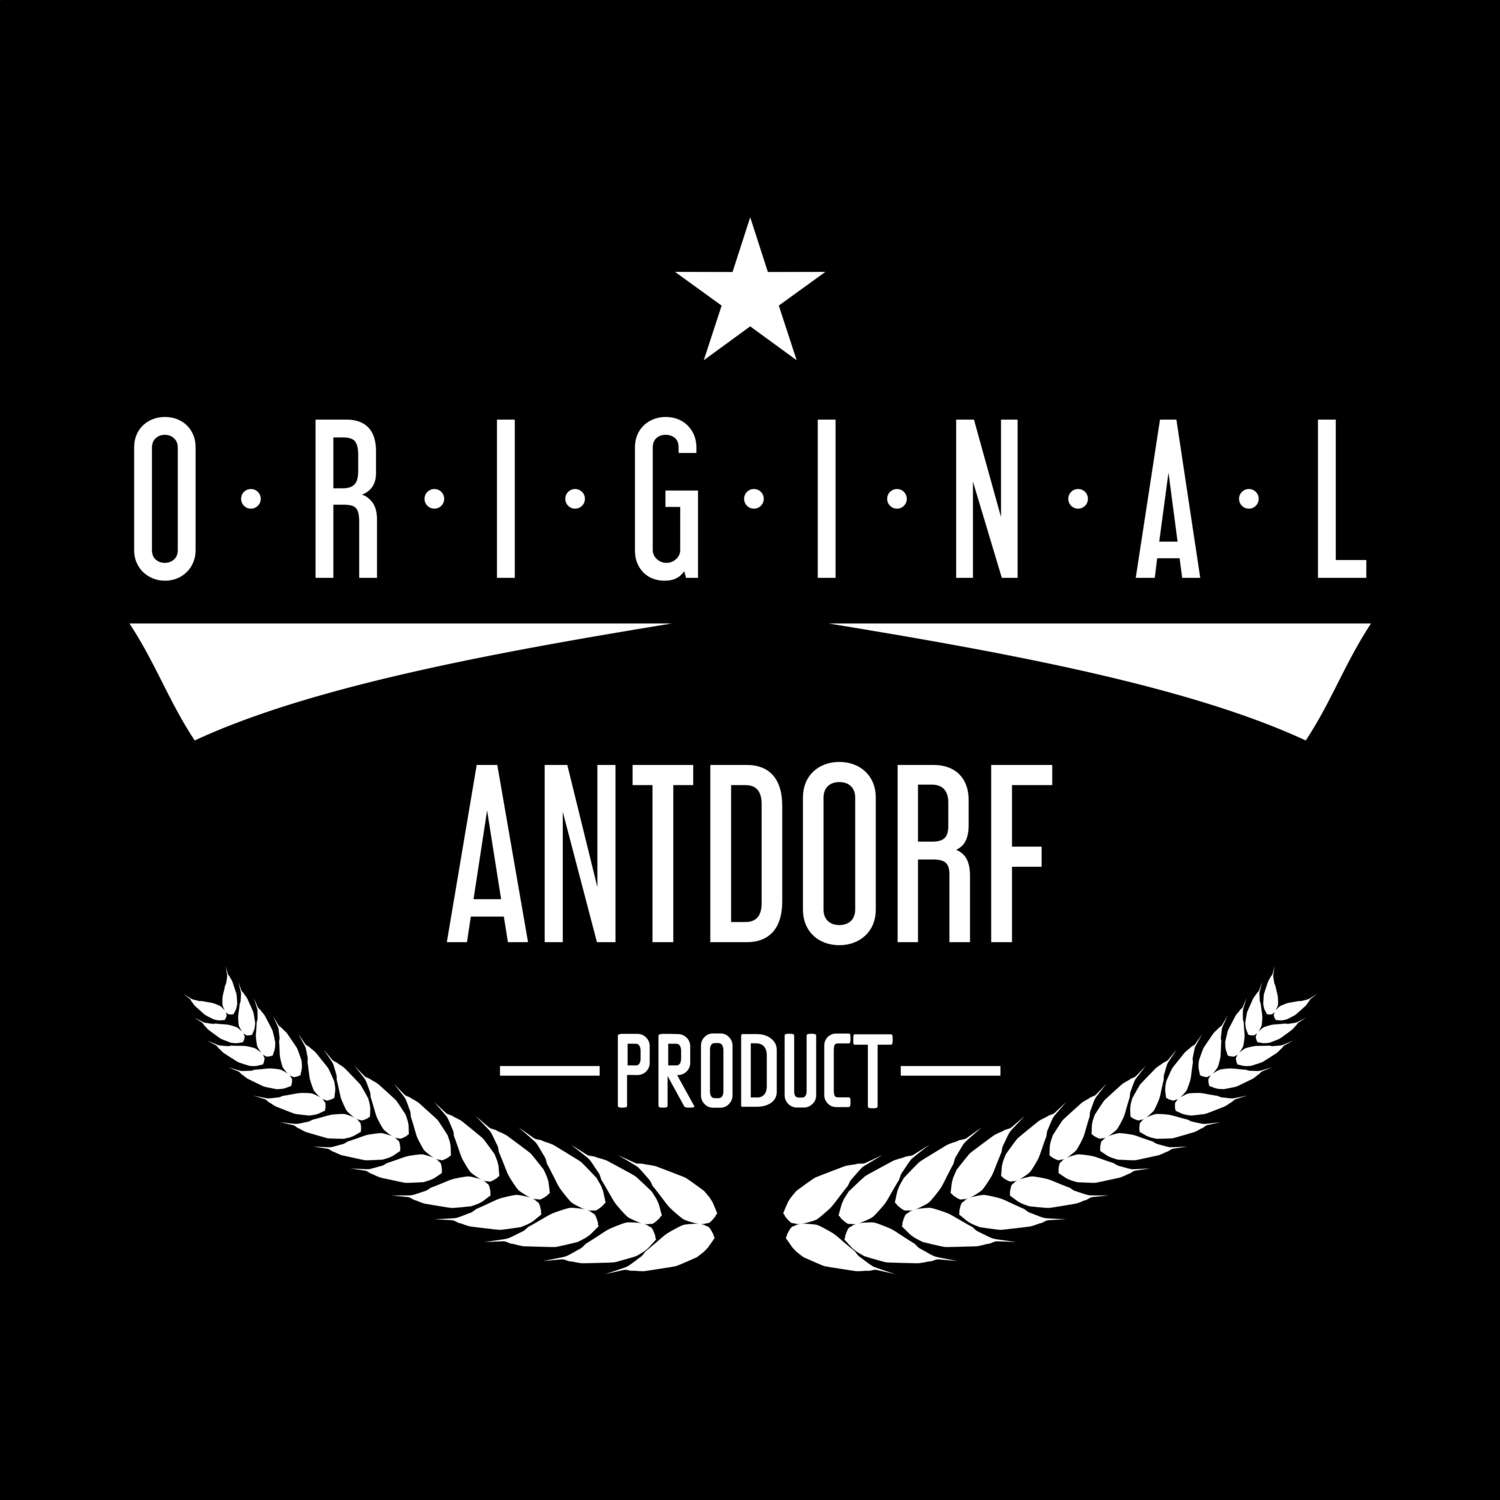 Antdorf T-Shirt »Original Product«